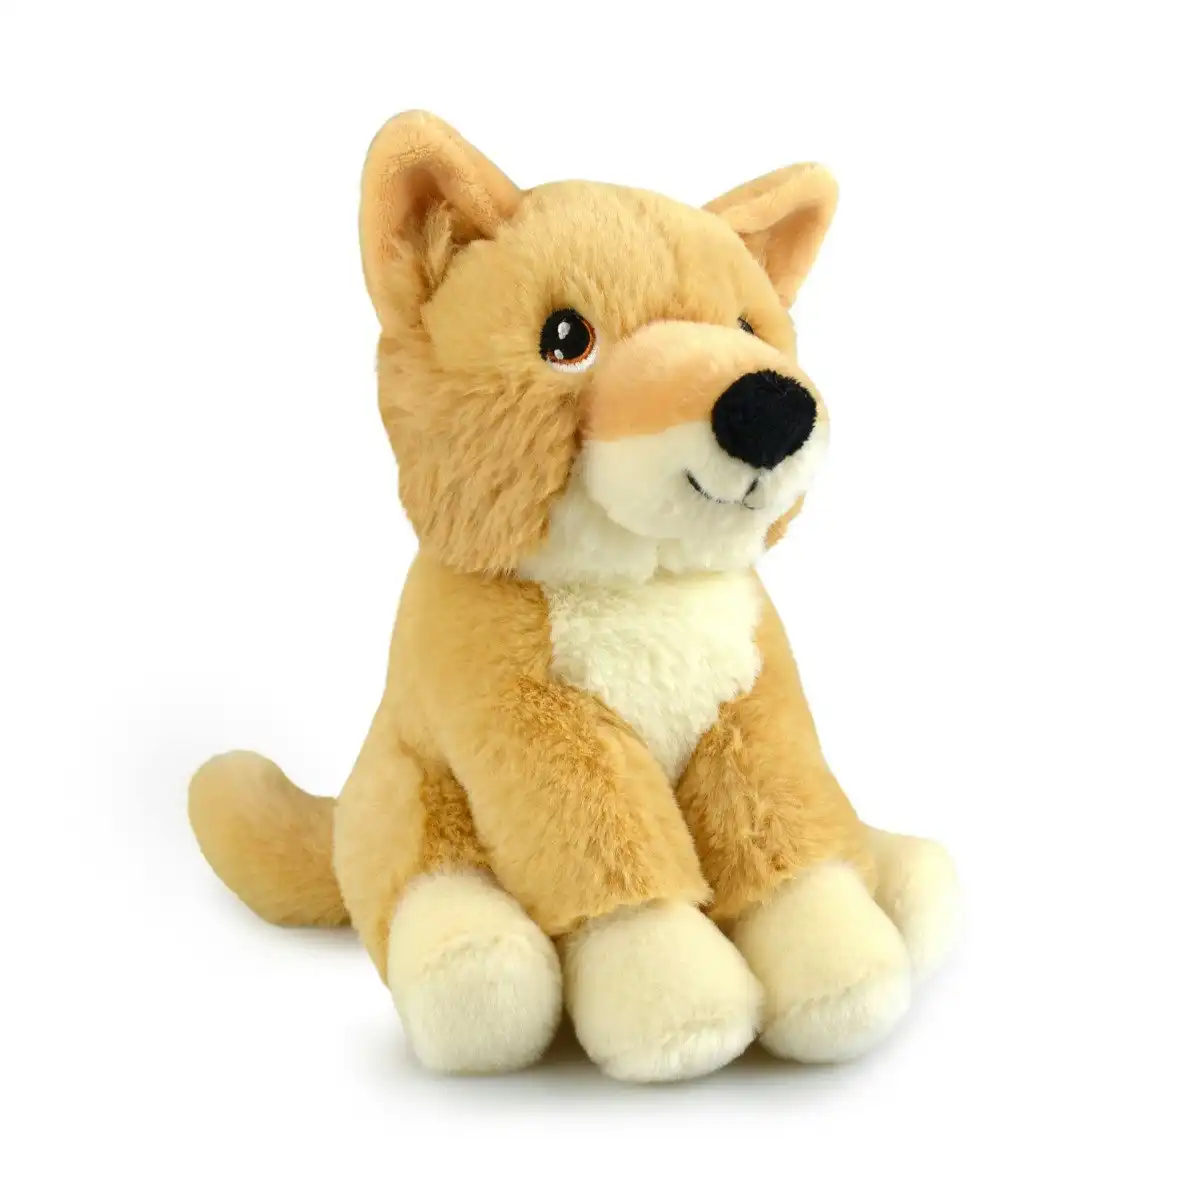 Keeleco Dingo Kids 18cm Souvenir/Gifts Soft Animal Plush Stuffed Toy Yellow 3Y+